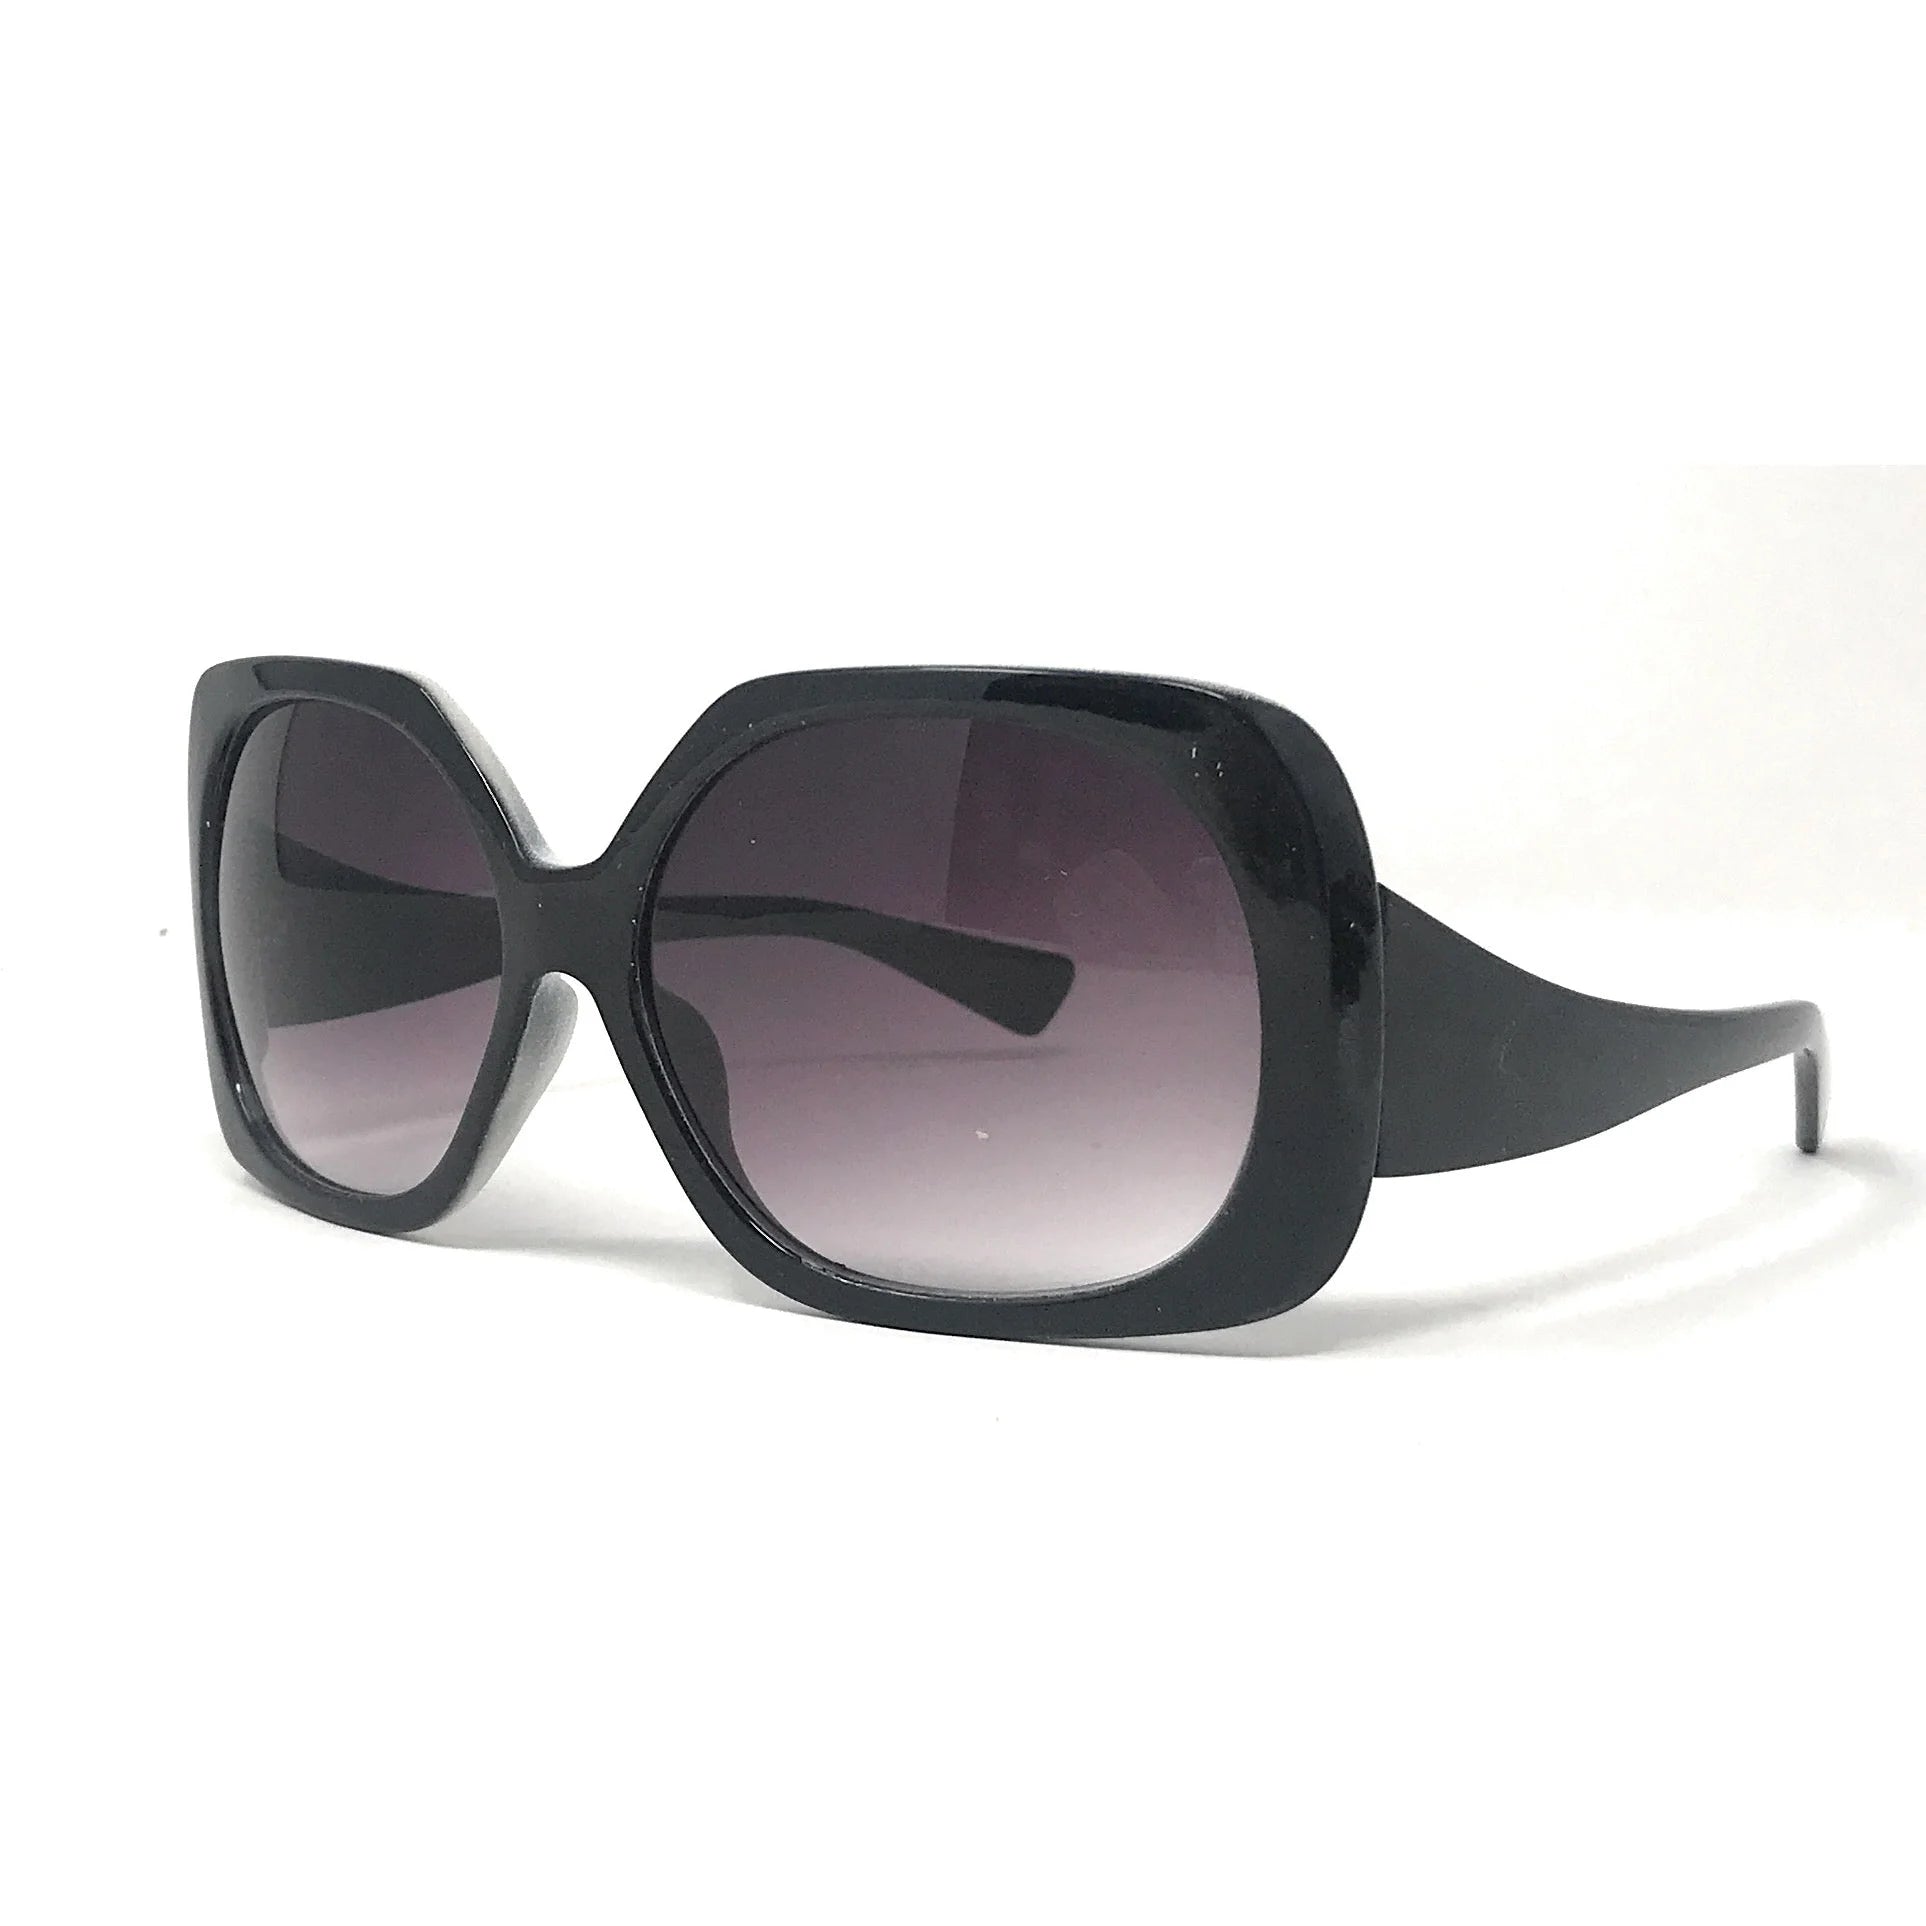 Rachel Black Square Oversized Sunglasses Retro 1960's 